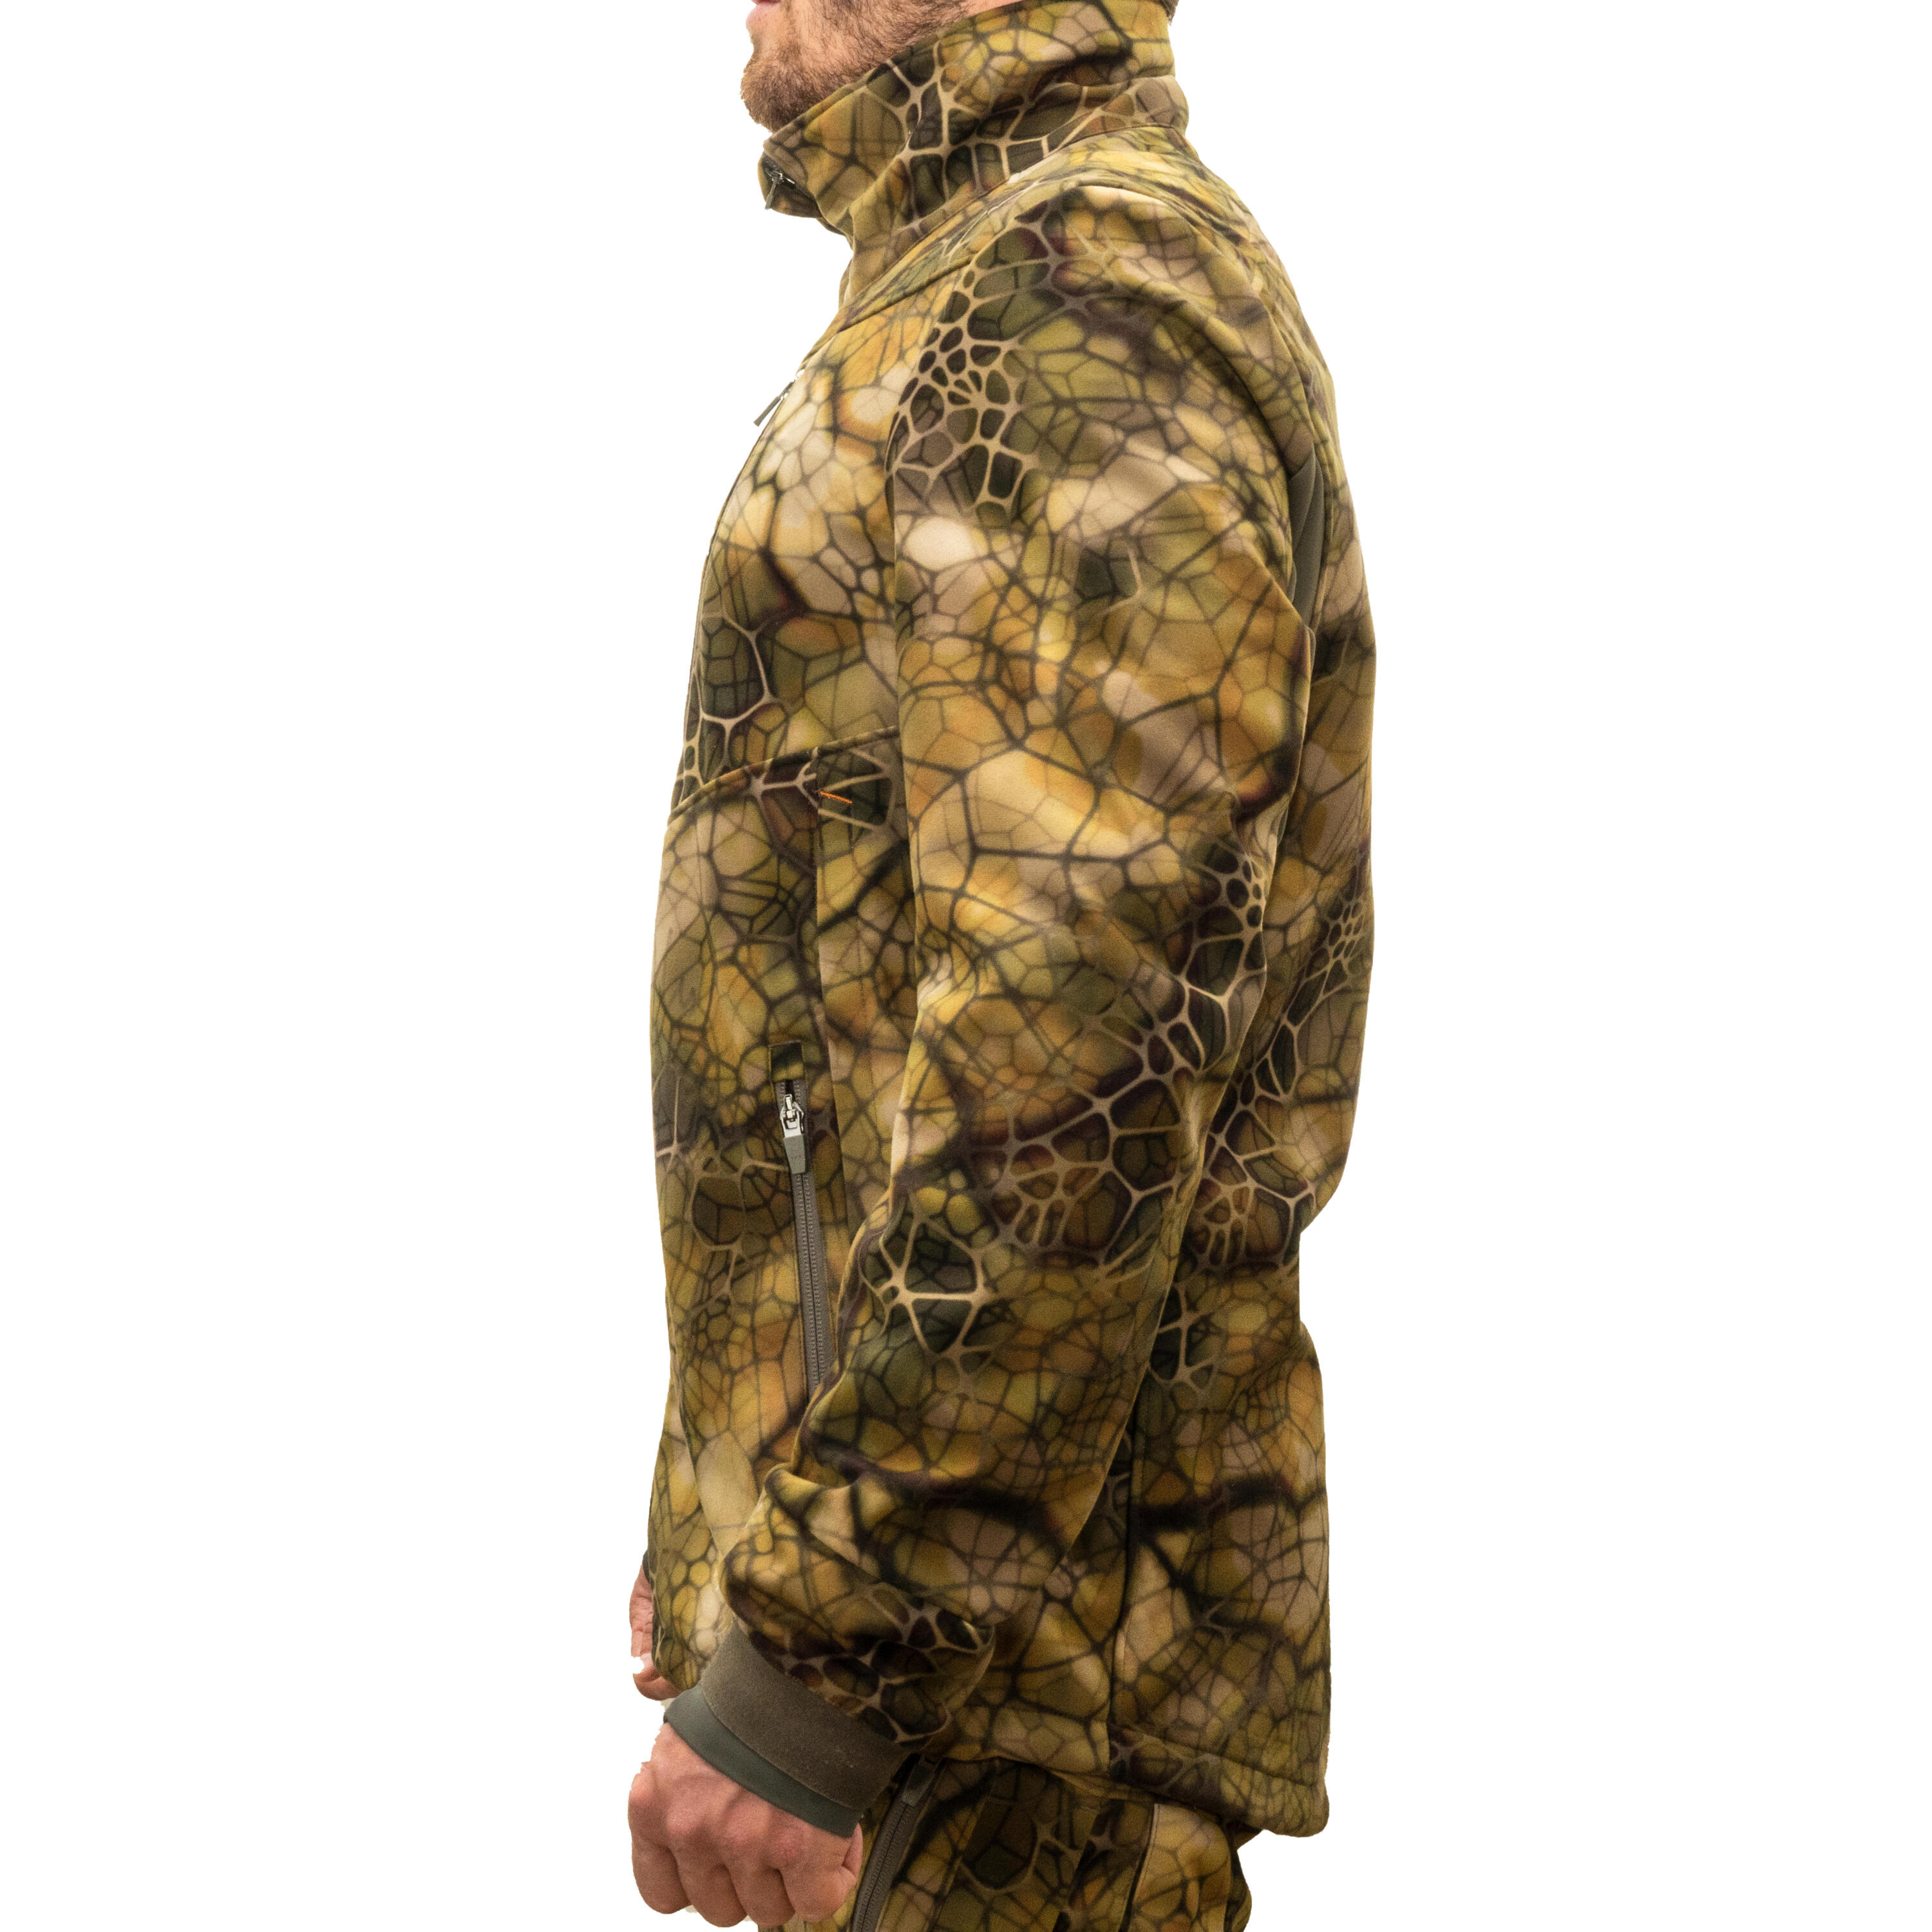 500 Softshell Silent Hunting Jacket - Camo 4/11